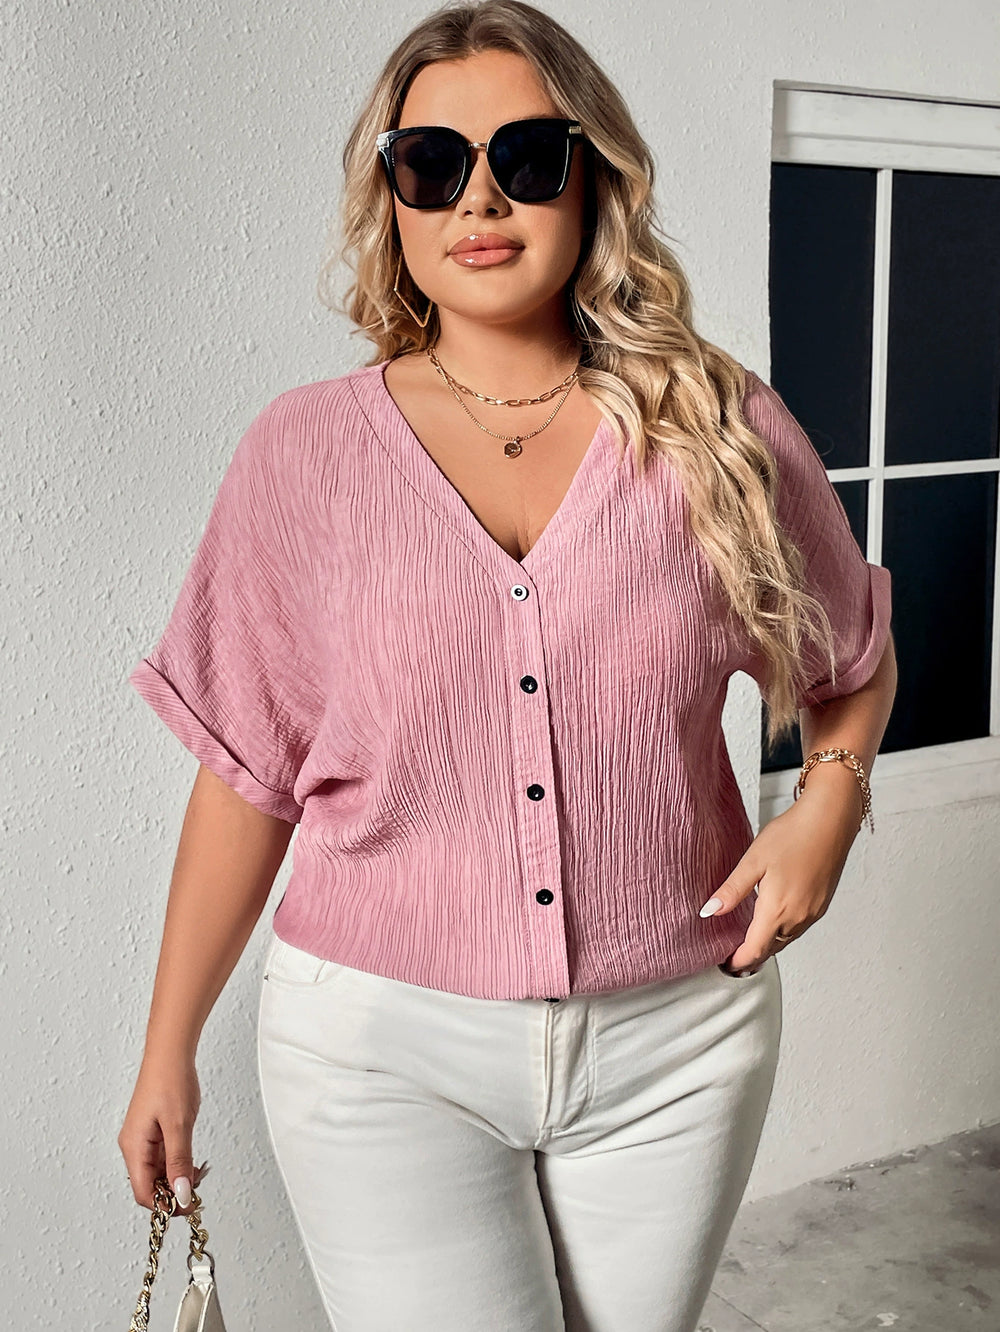 Plus Size Women's Blouses Oversized Summer Shirt Button Tops - bertofonsi